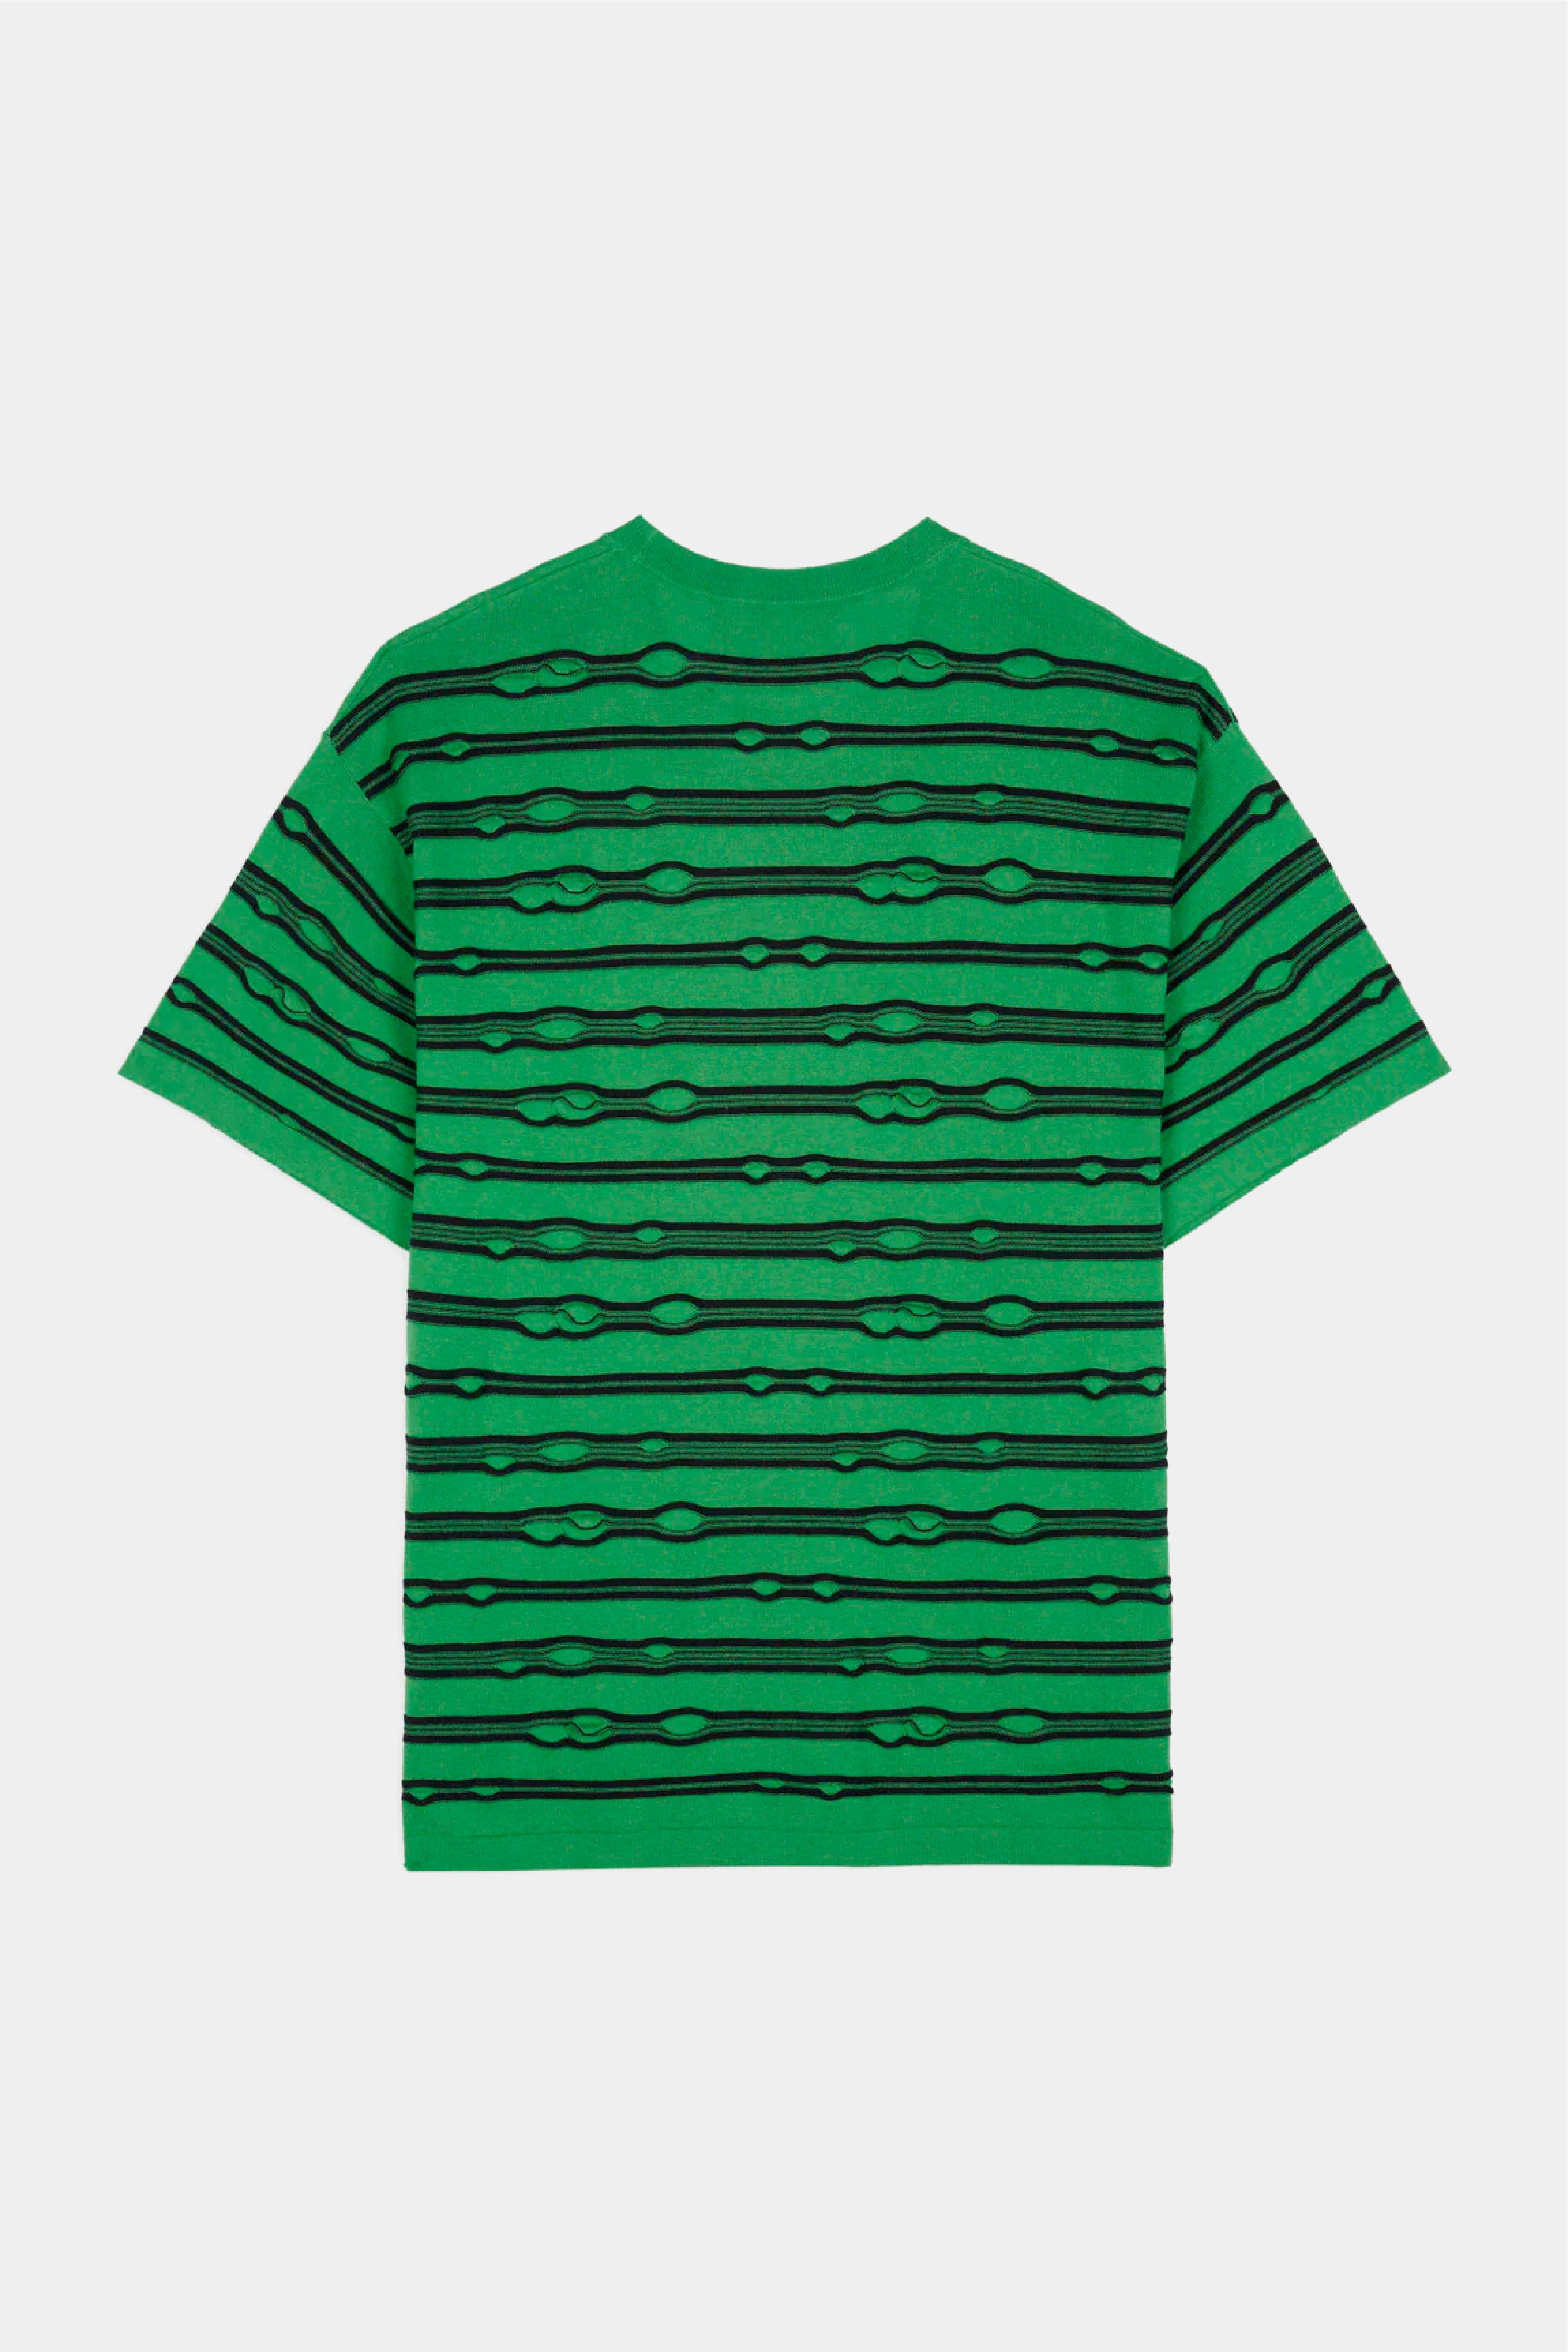 Selectshop FRAME - BRAIN DEAD Puckered Striped T-Shirt T-Shirts Concept Store Dubai